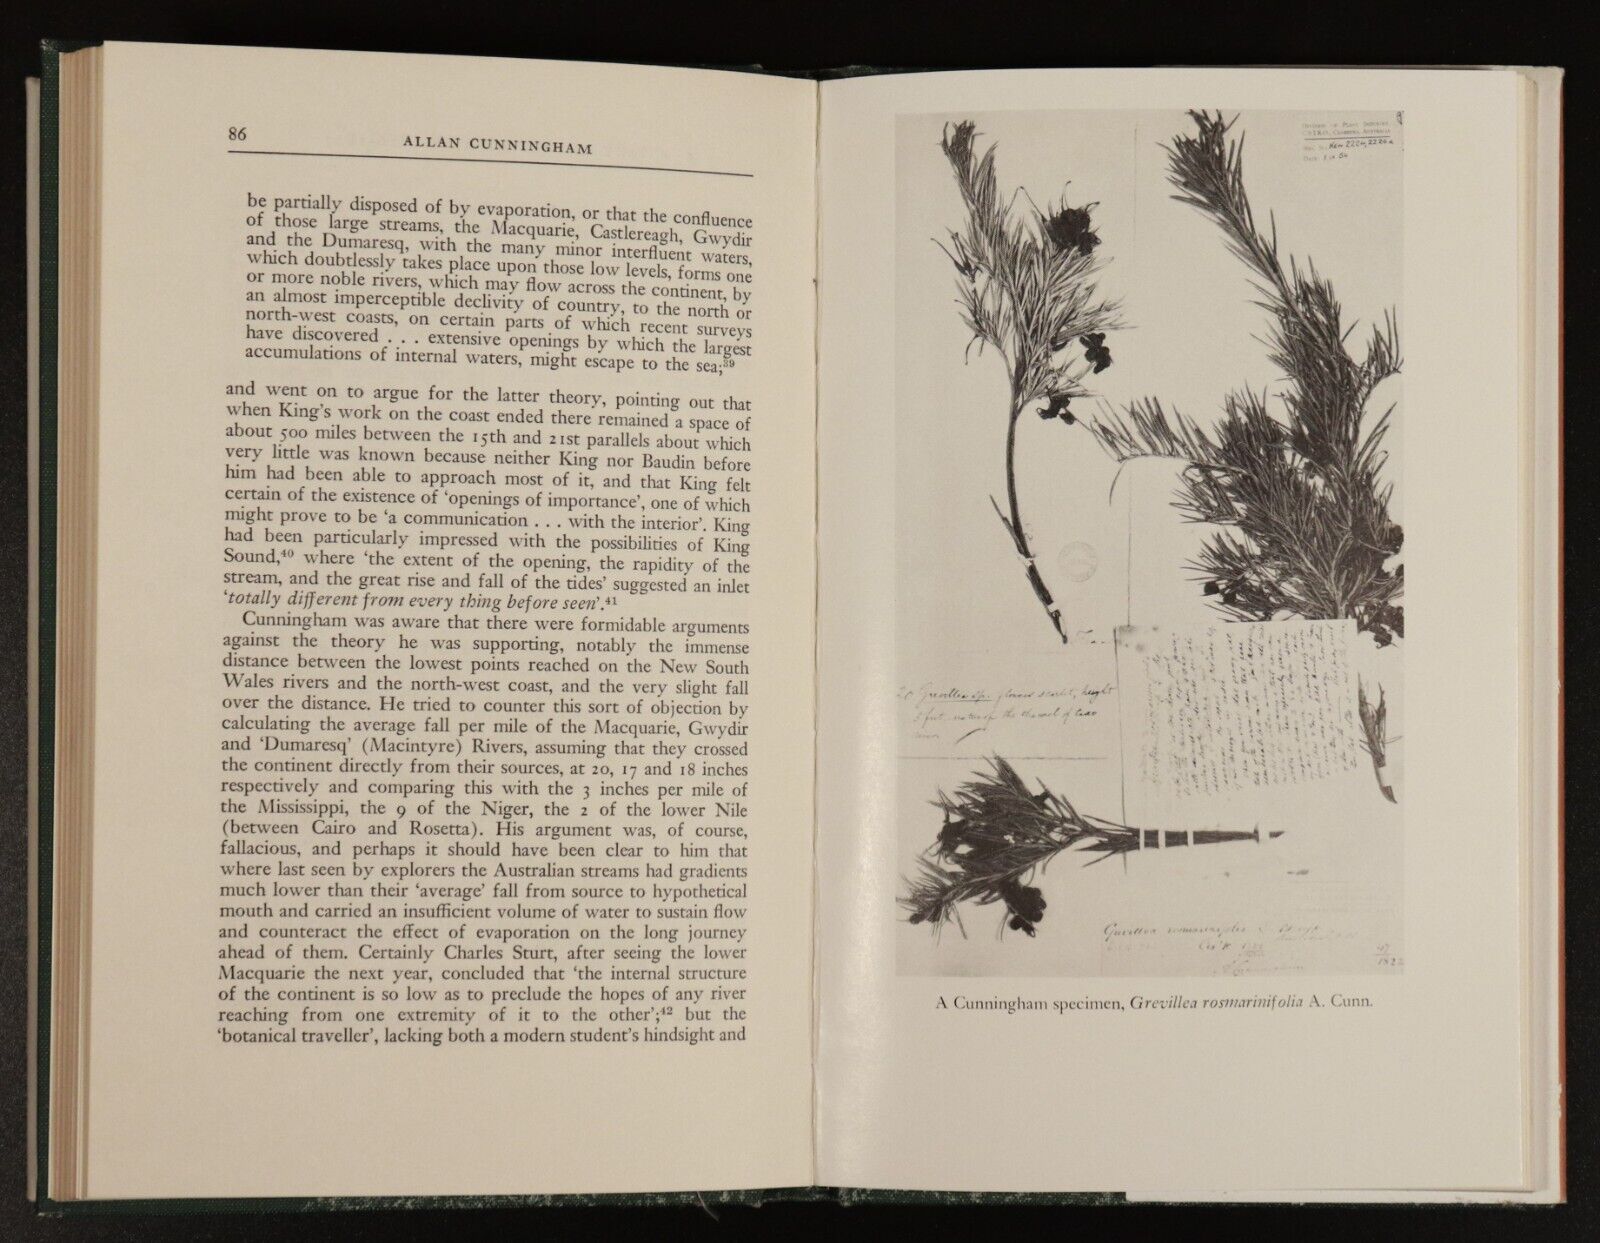 1970 Allan Cunningham: Botanist & Explorer Australian Exploration History Book